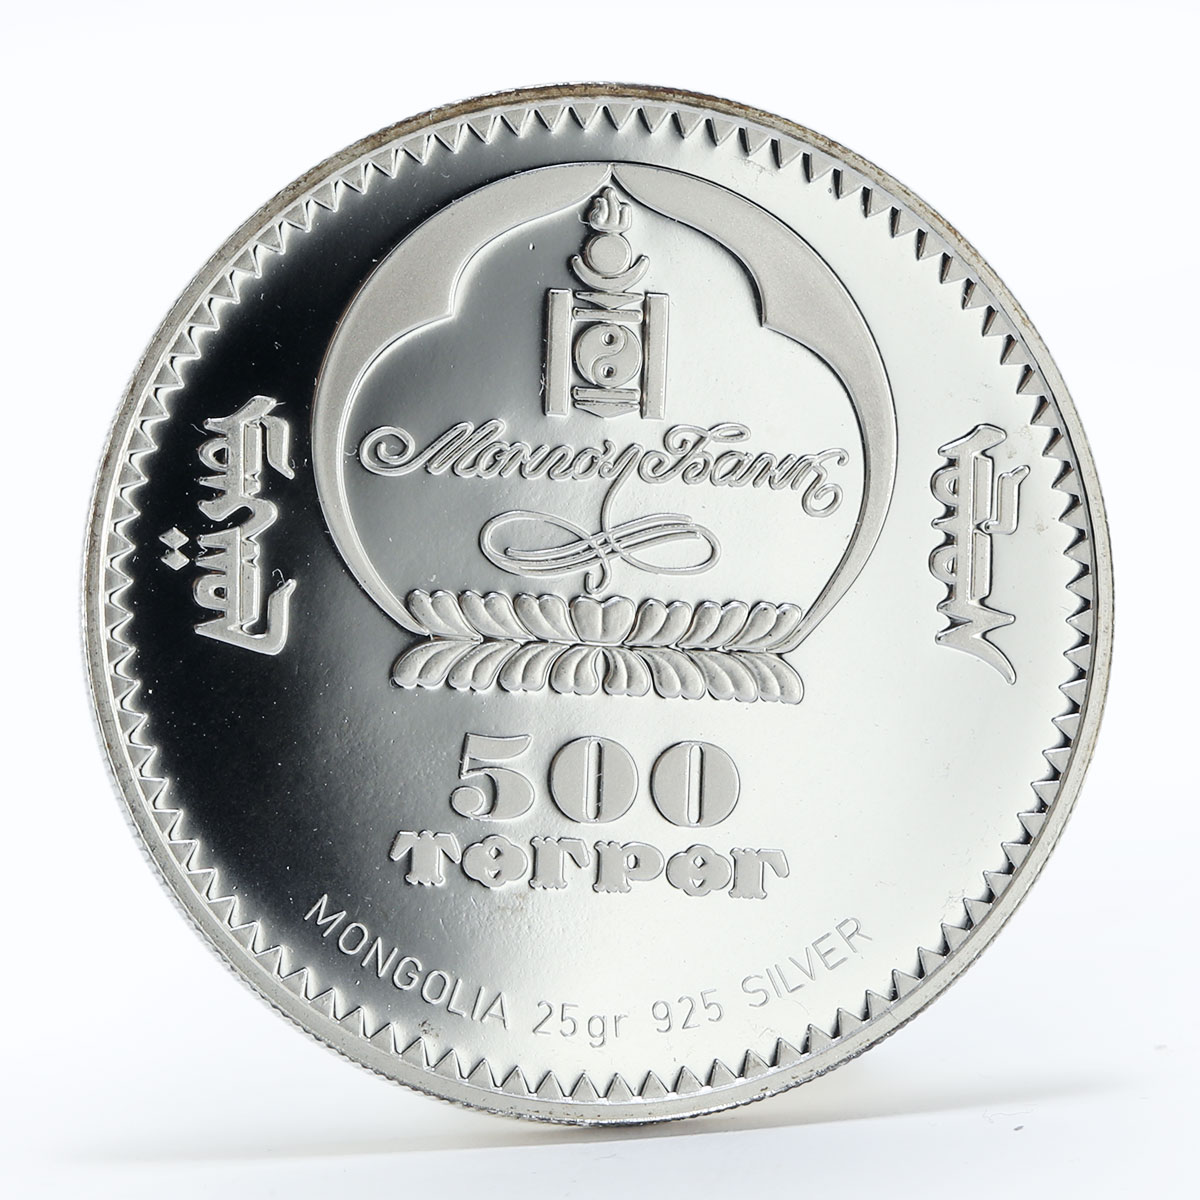 Mongolia 500 togrog Tawny Eagle bird colored silver coin 2007